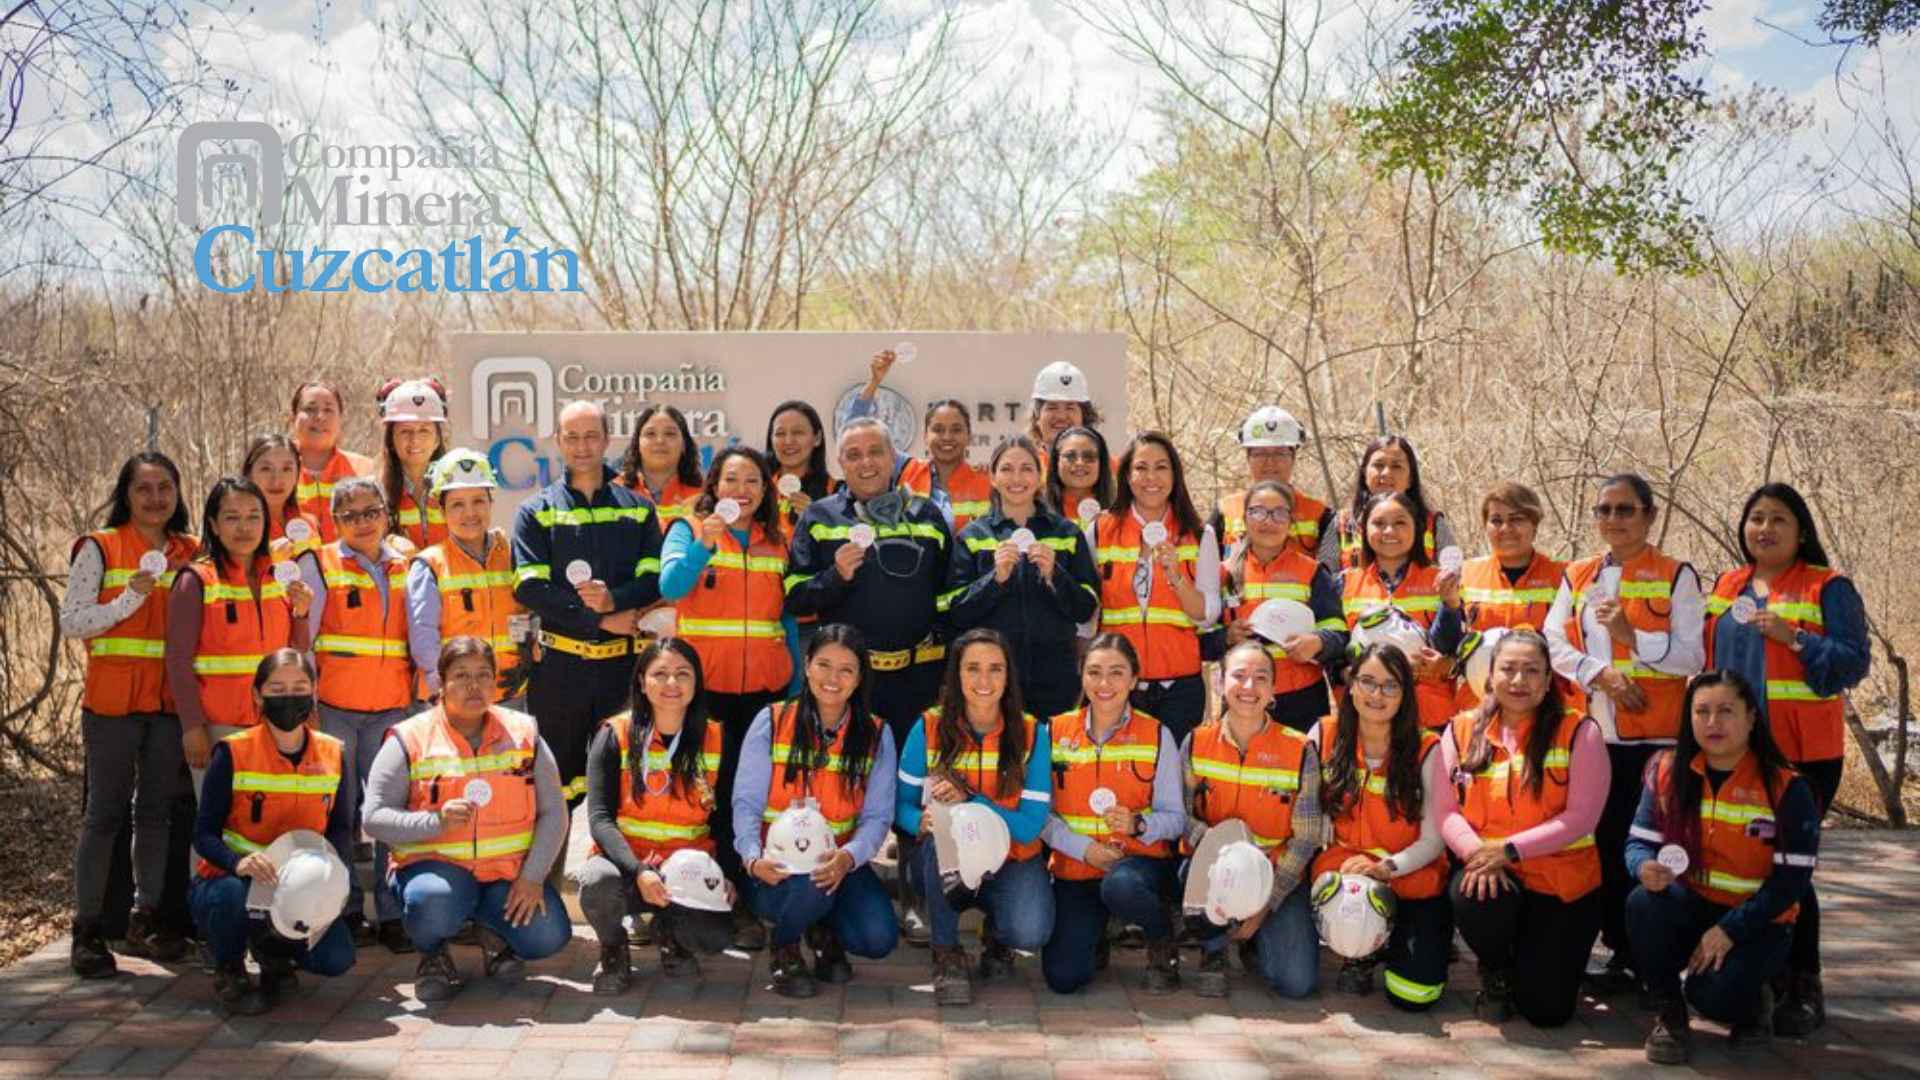 Compañía Minera Cuzcatlán se afilia a Mujeres WIM de México